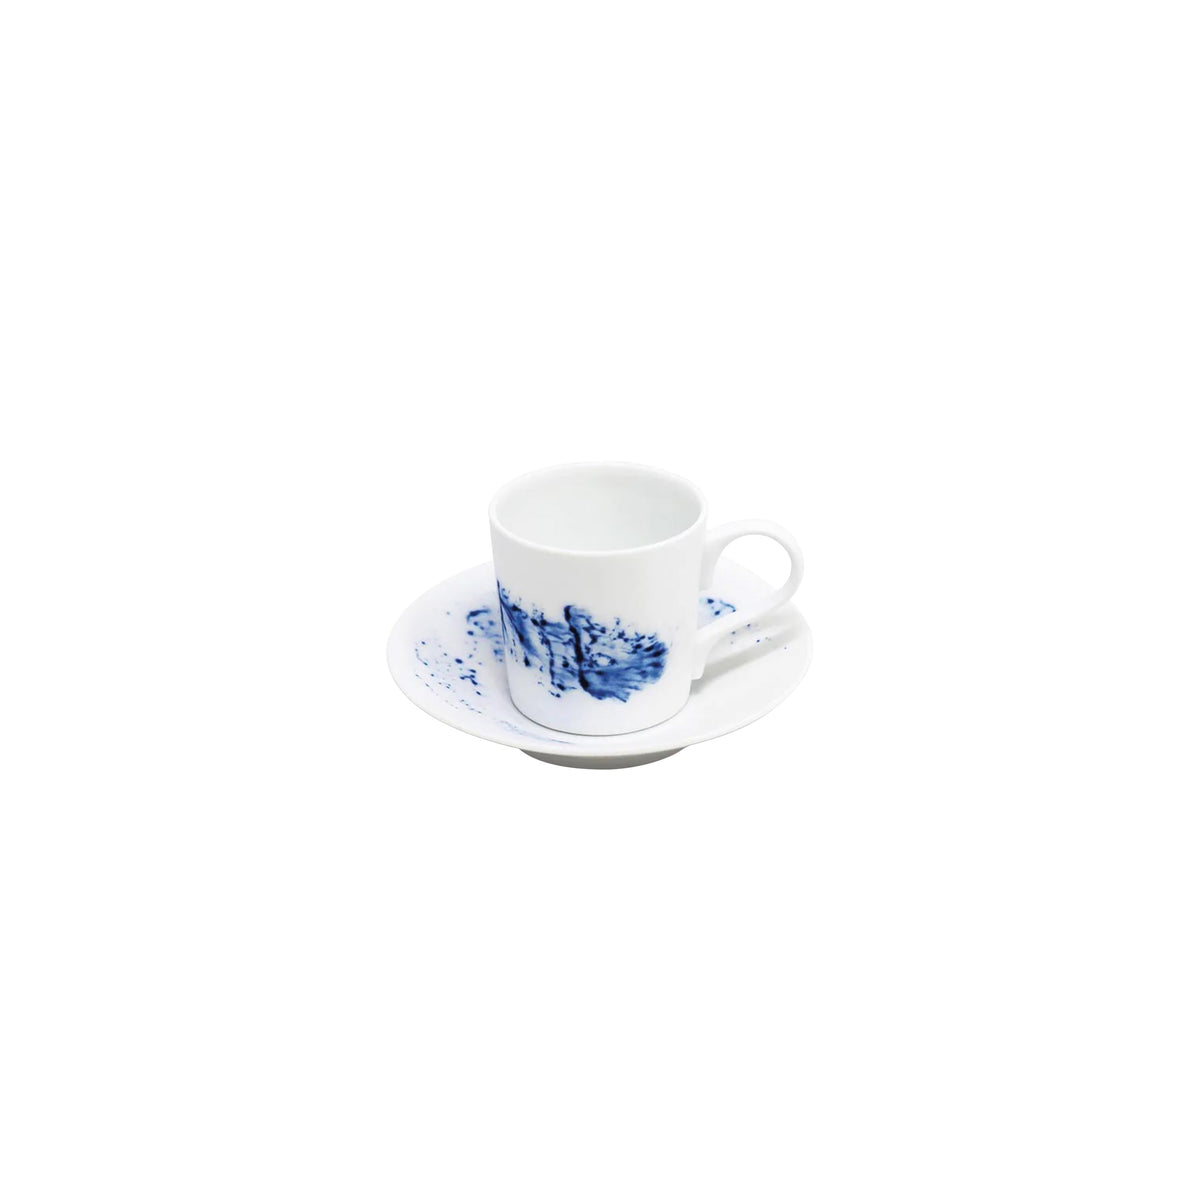 BLUE IMPRESSION - Pair of coffee mugs